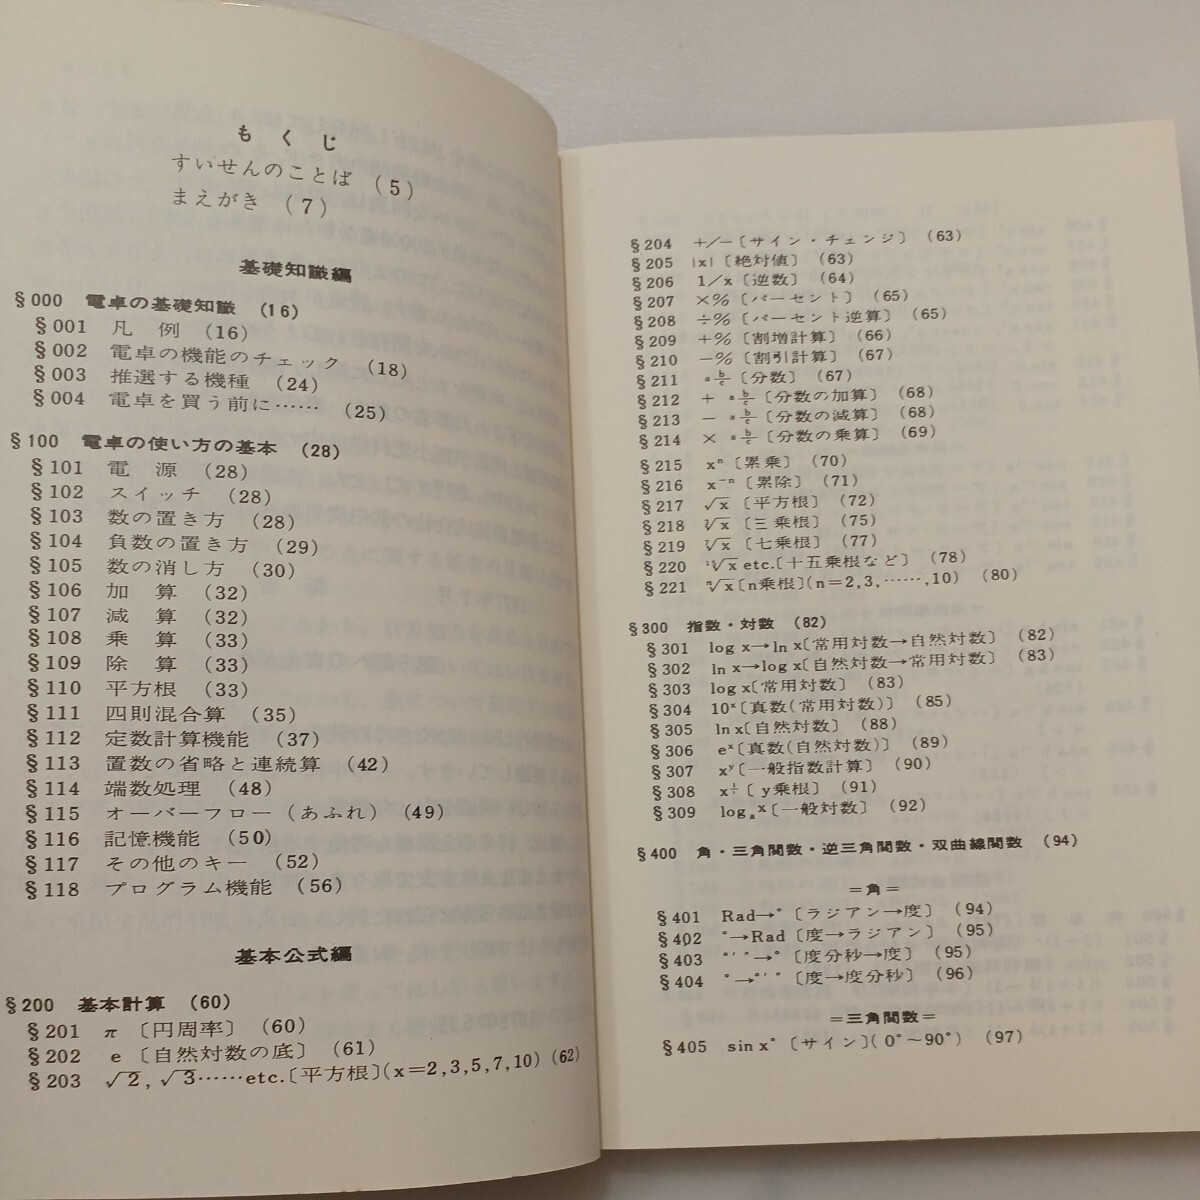 zaa-569♪電卓に強くなる: すぐに役立つ公式と実例 (ブルーバックス 327) 新書 1977/7/1 気賀 康夫 (著)